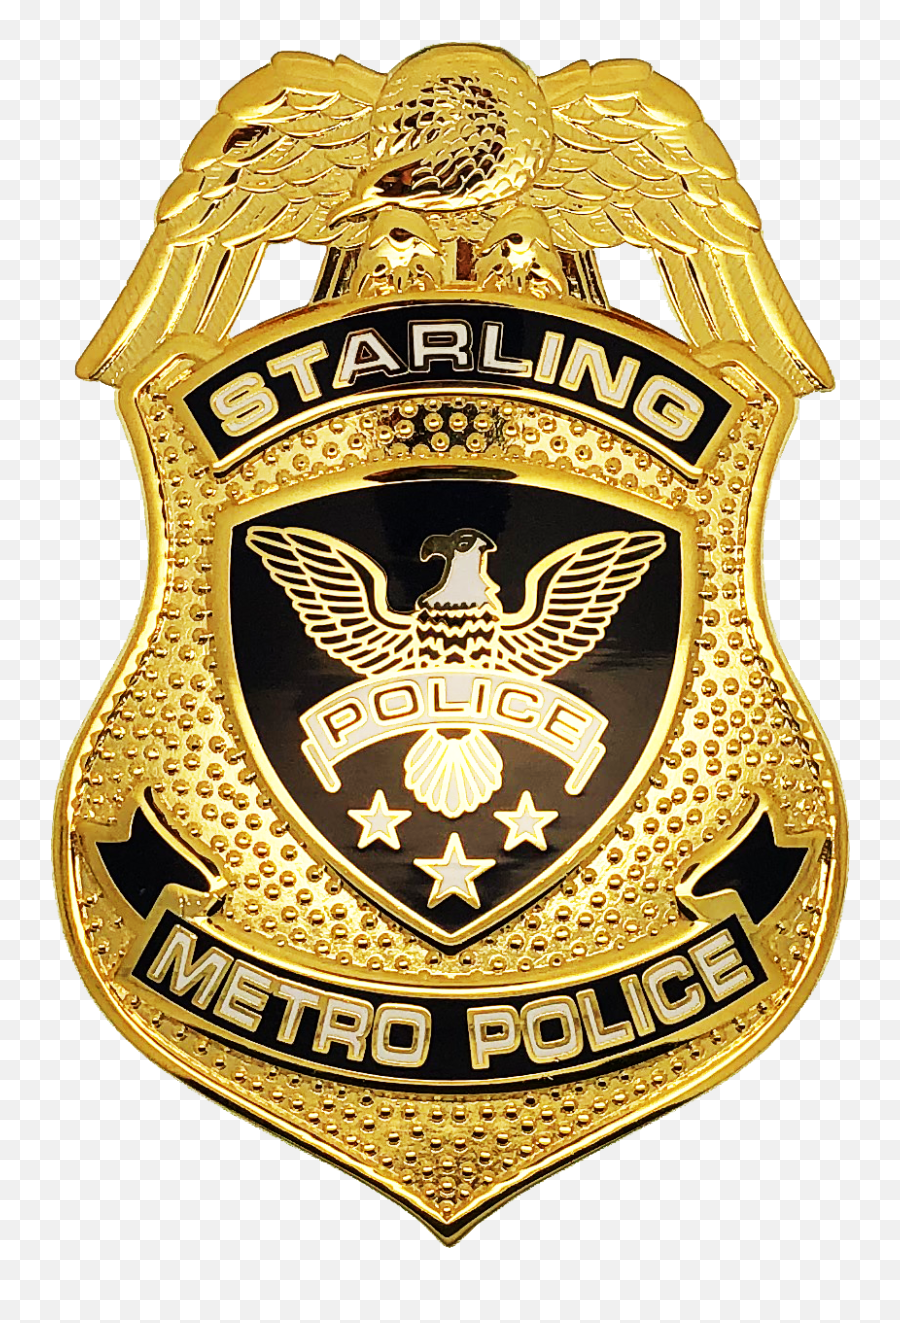 Download Starling Metro Police - Emblem Png,Police Shield Png